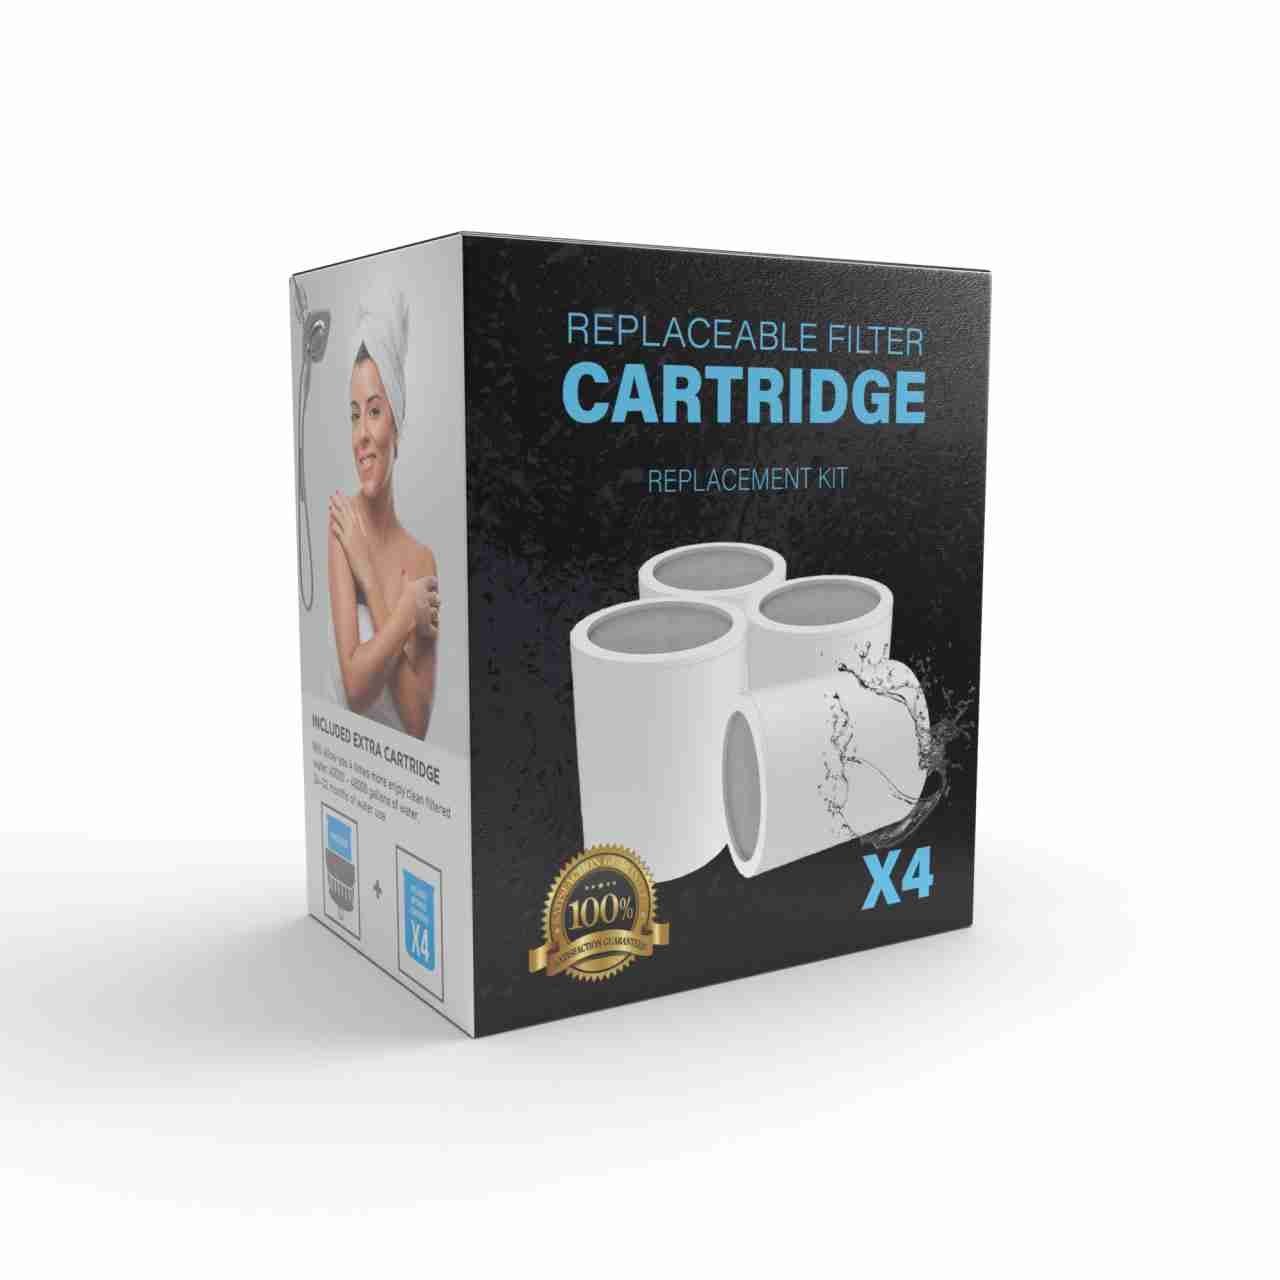 shower-filter-cartridge with cash back rebate